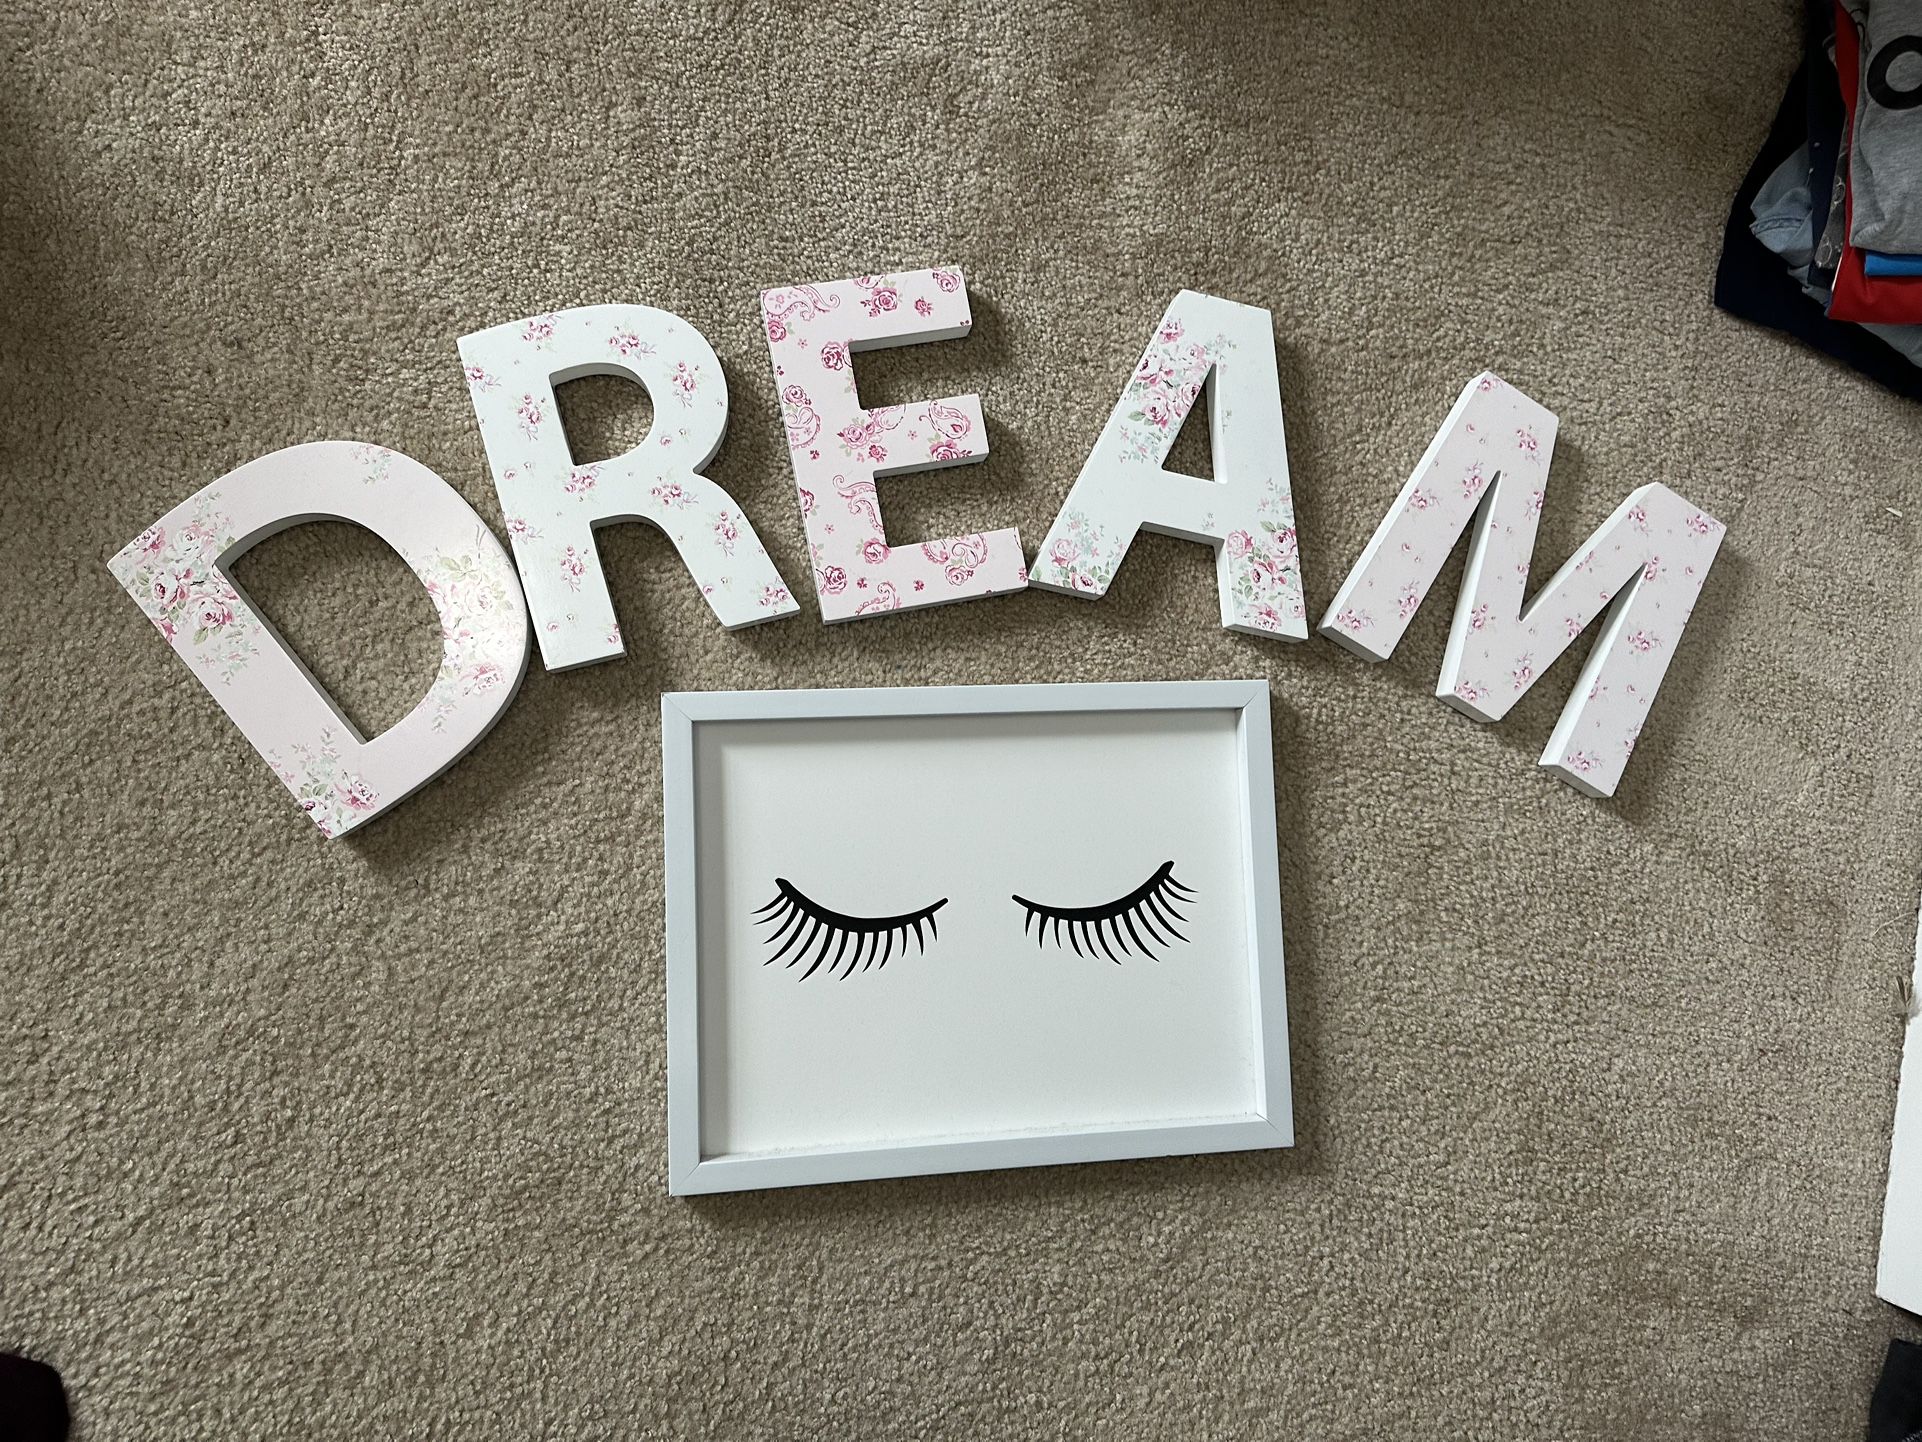 DREAM & Closed Eyes Wall Art